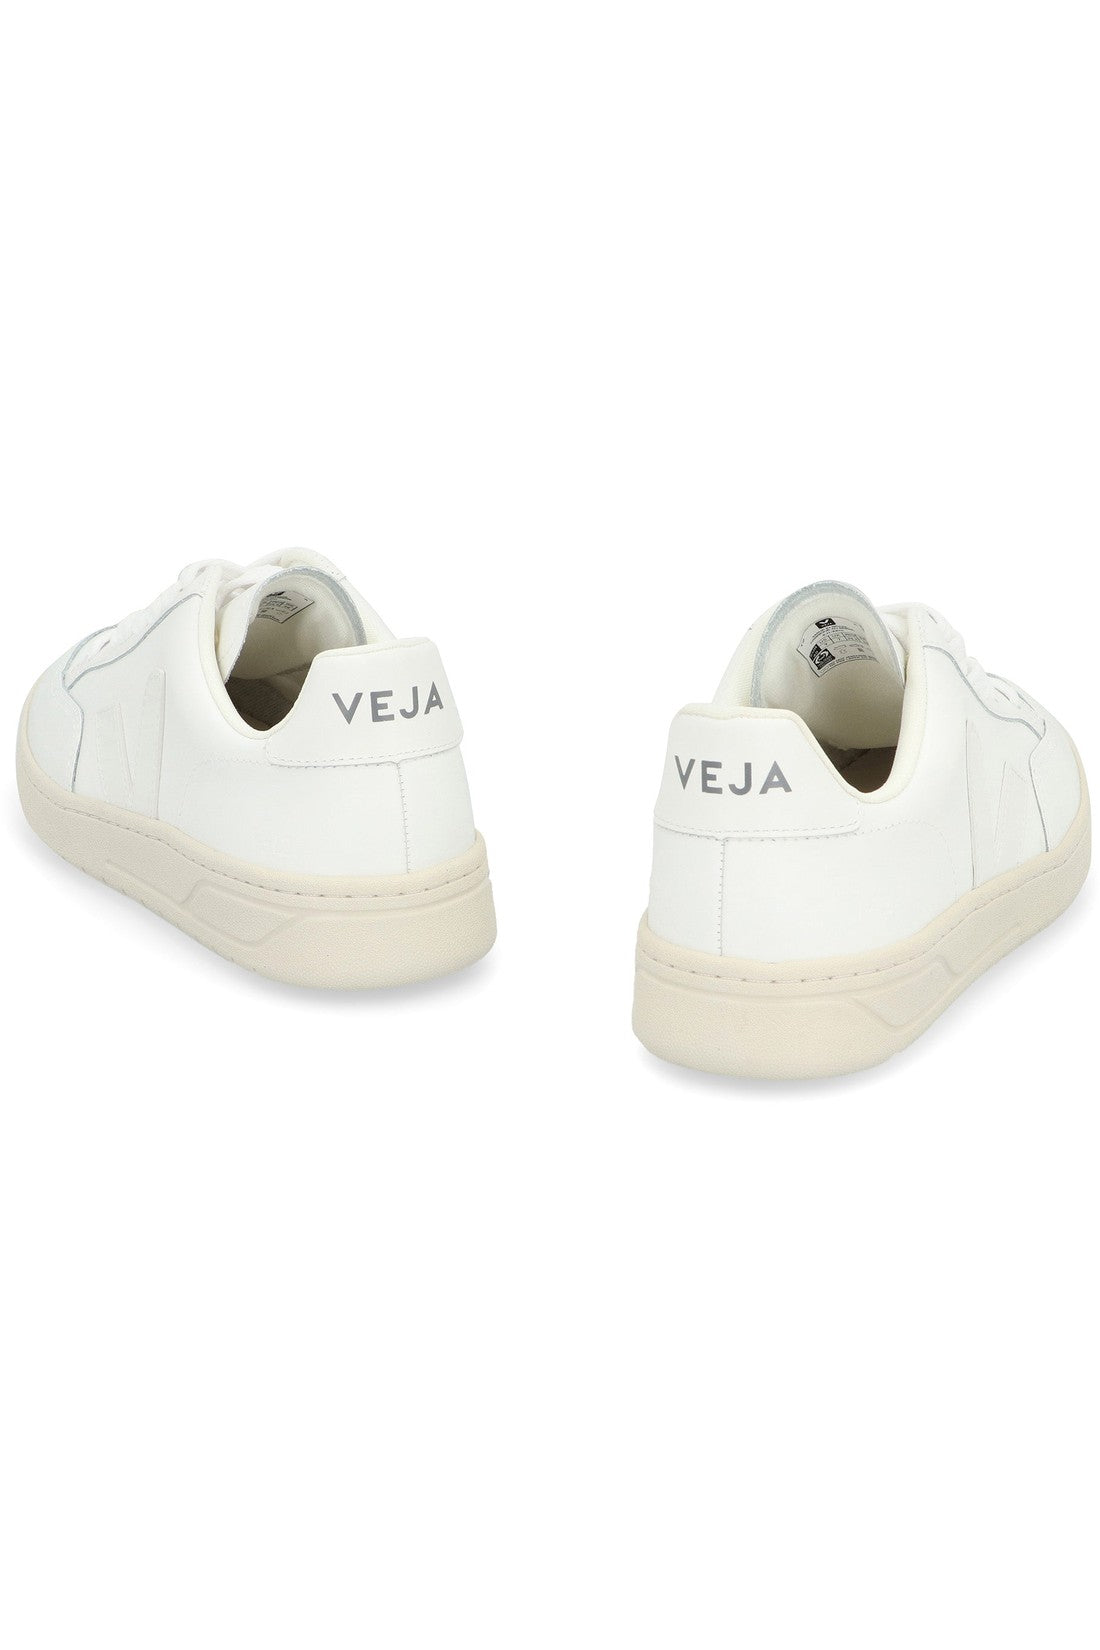 Veja-OUTLET-SALE-V-12 leather low-top sneakers-ARCHIVIST